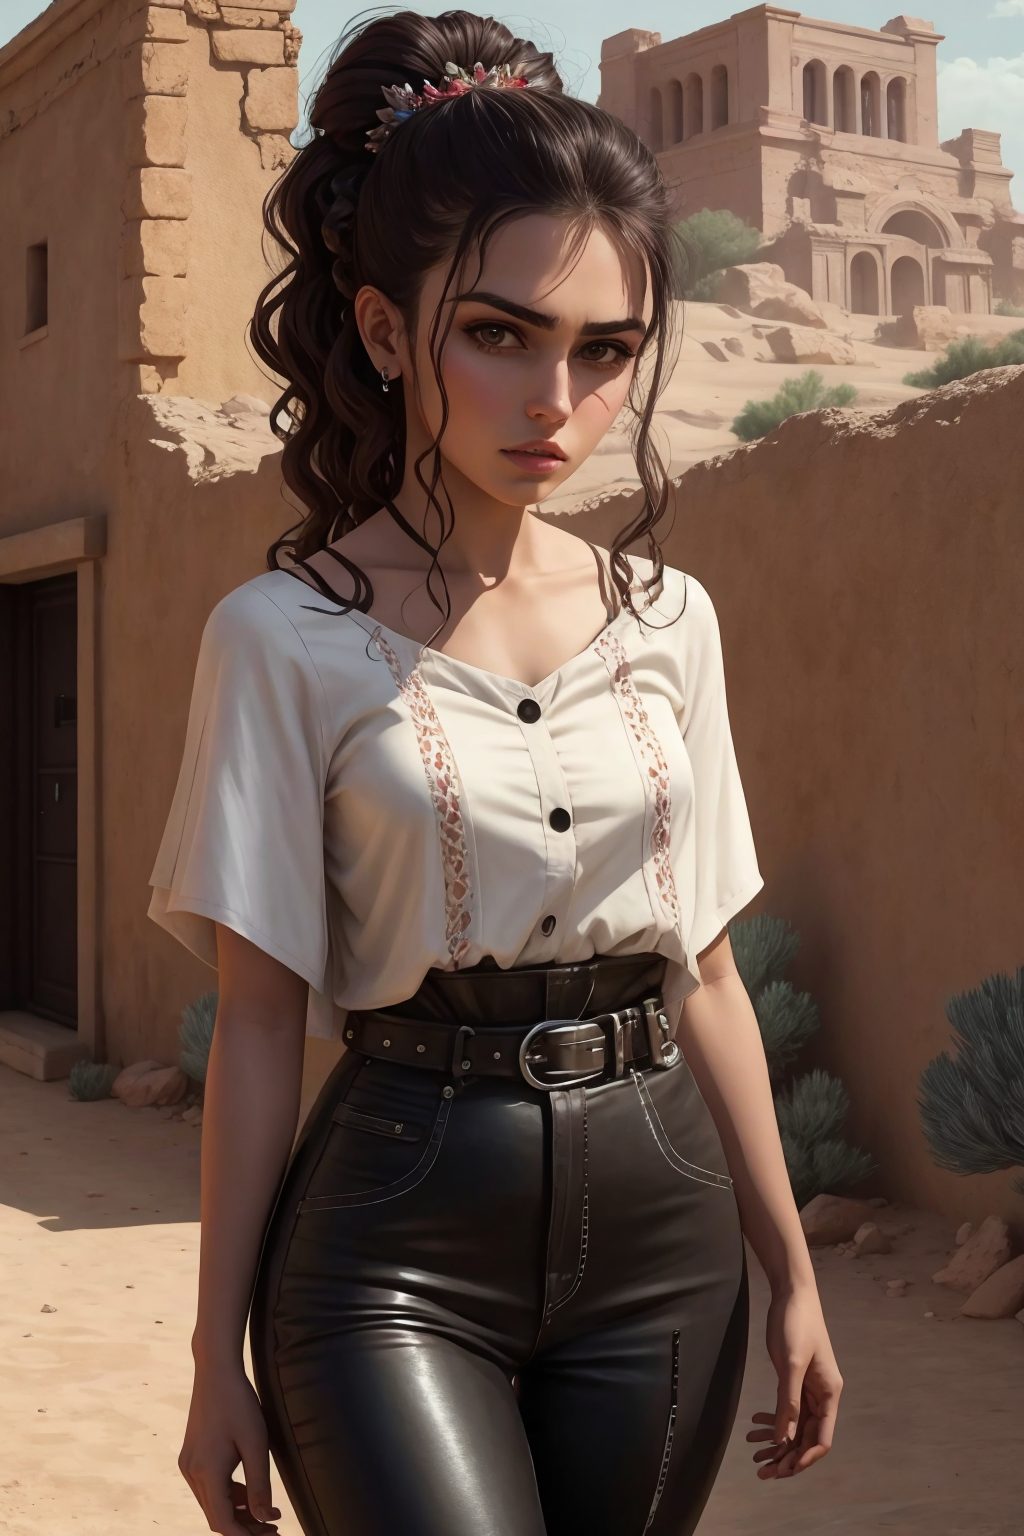 (SouthOfTheBorderSD15:0.5) senorita western (RPG character:1.2) painting brunette hair upsweep updo button shirt poncho le...